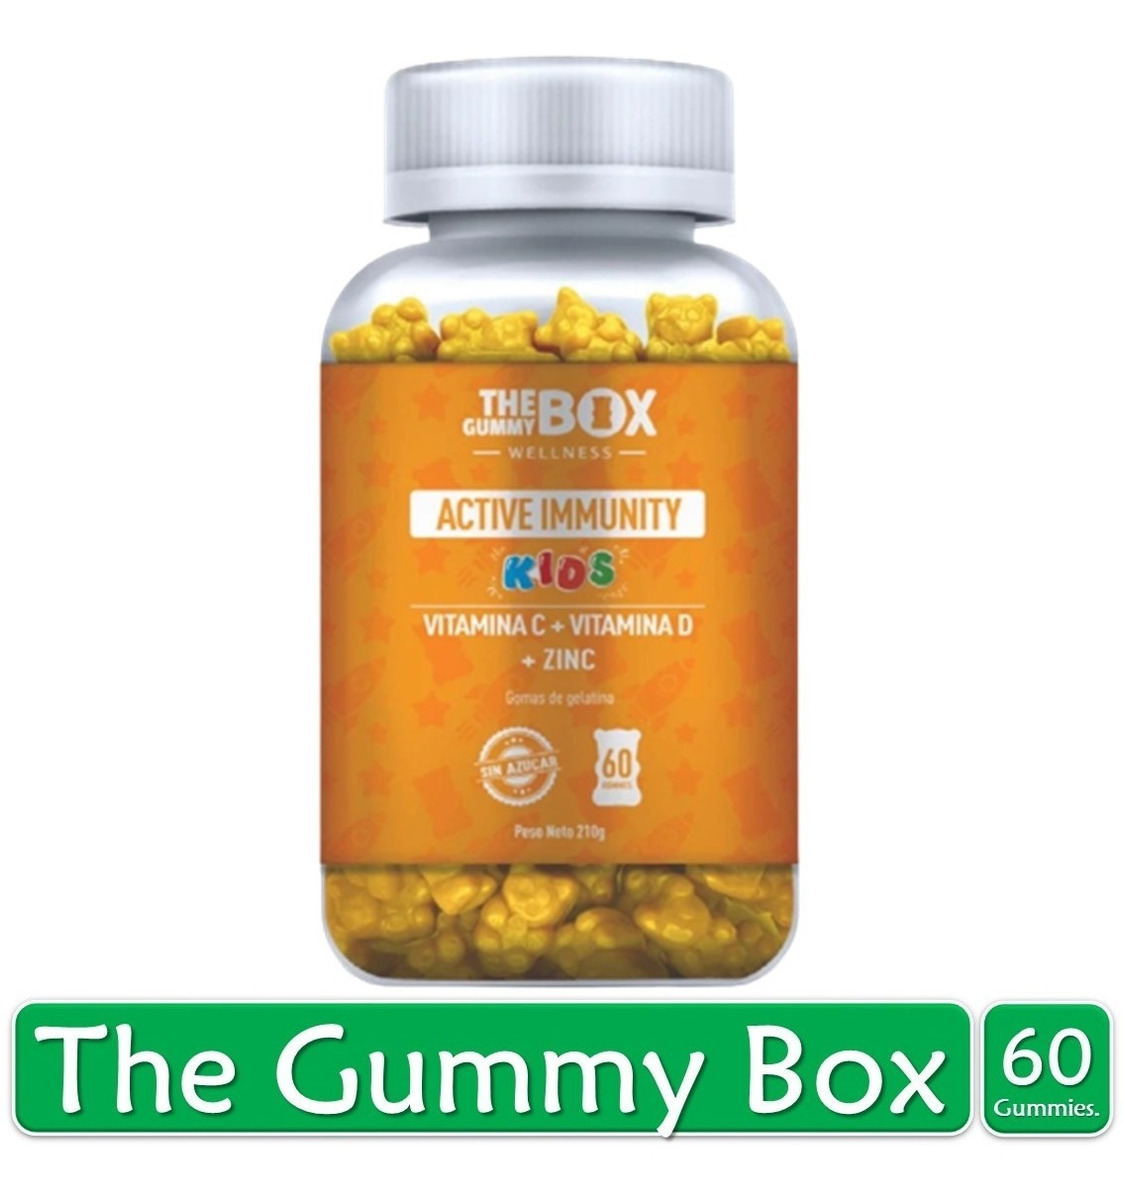 The Gummy Box Active Immunity Kids Vitaminac+vitaminaa+zinc